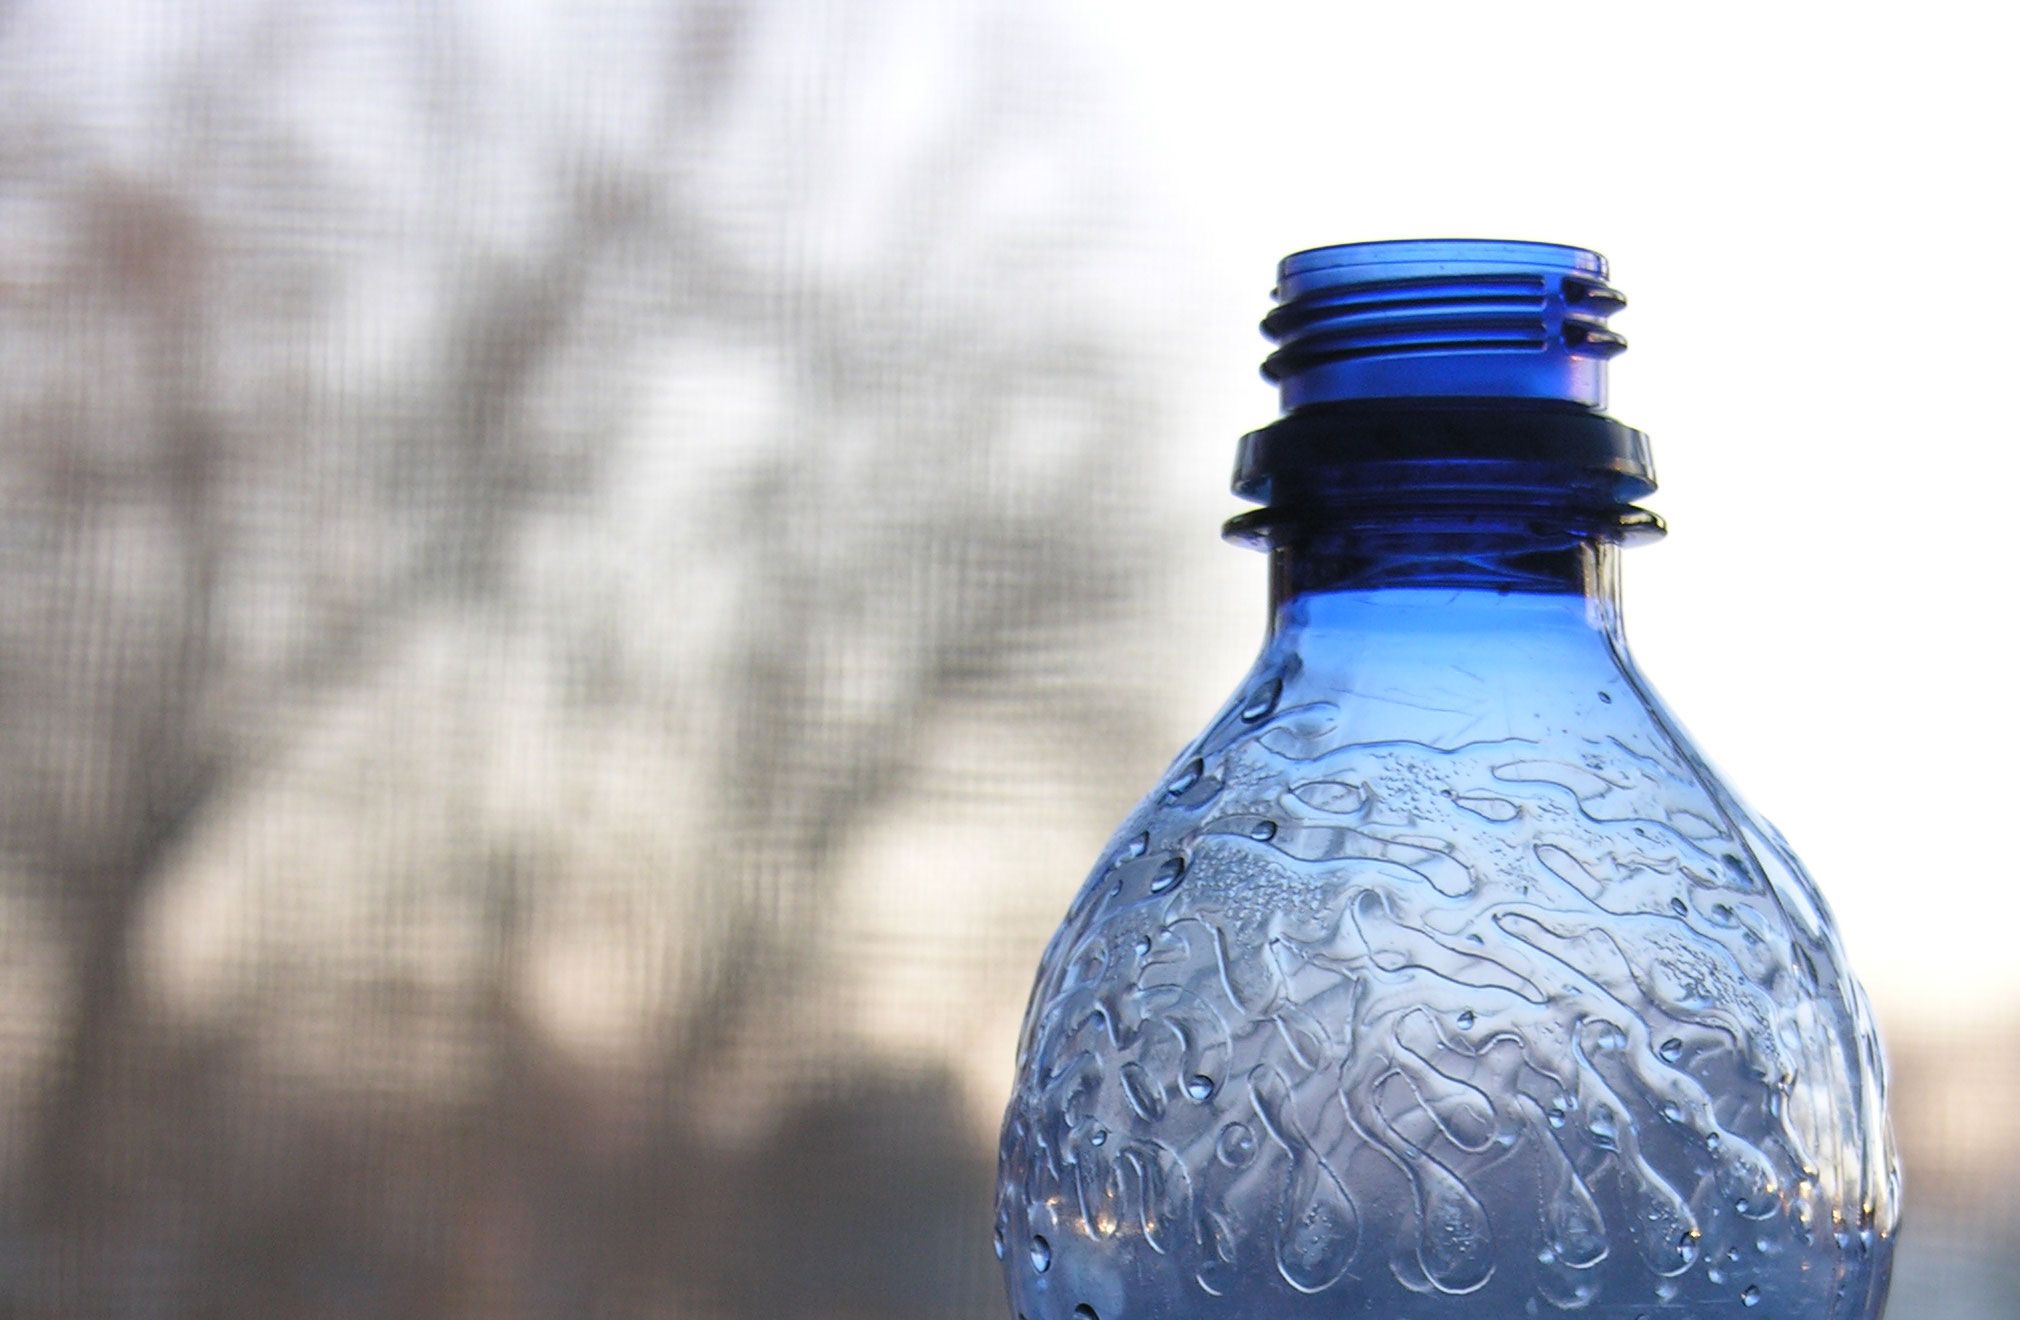 Продажа воды в бутылках. Бутылка для воды. Вода в бутылях. Открытая бутылка воды. Пластиковая бутылка для воды.